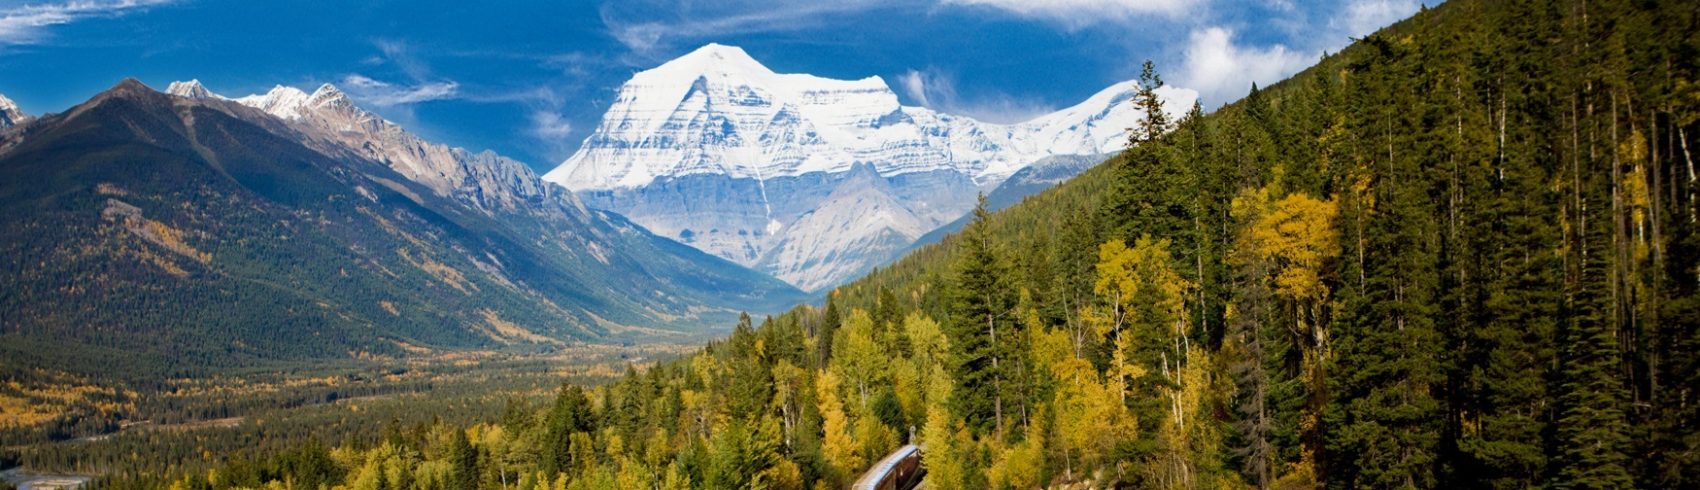 Alberta Canadian Rockies holidays train